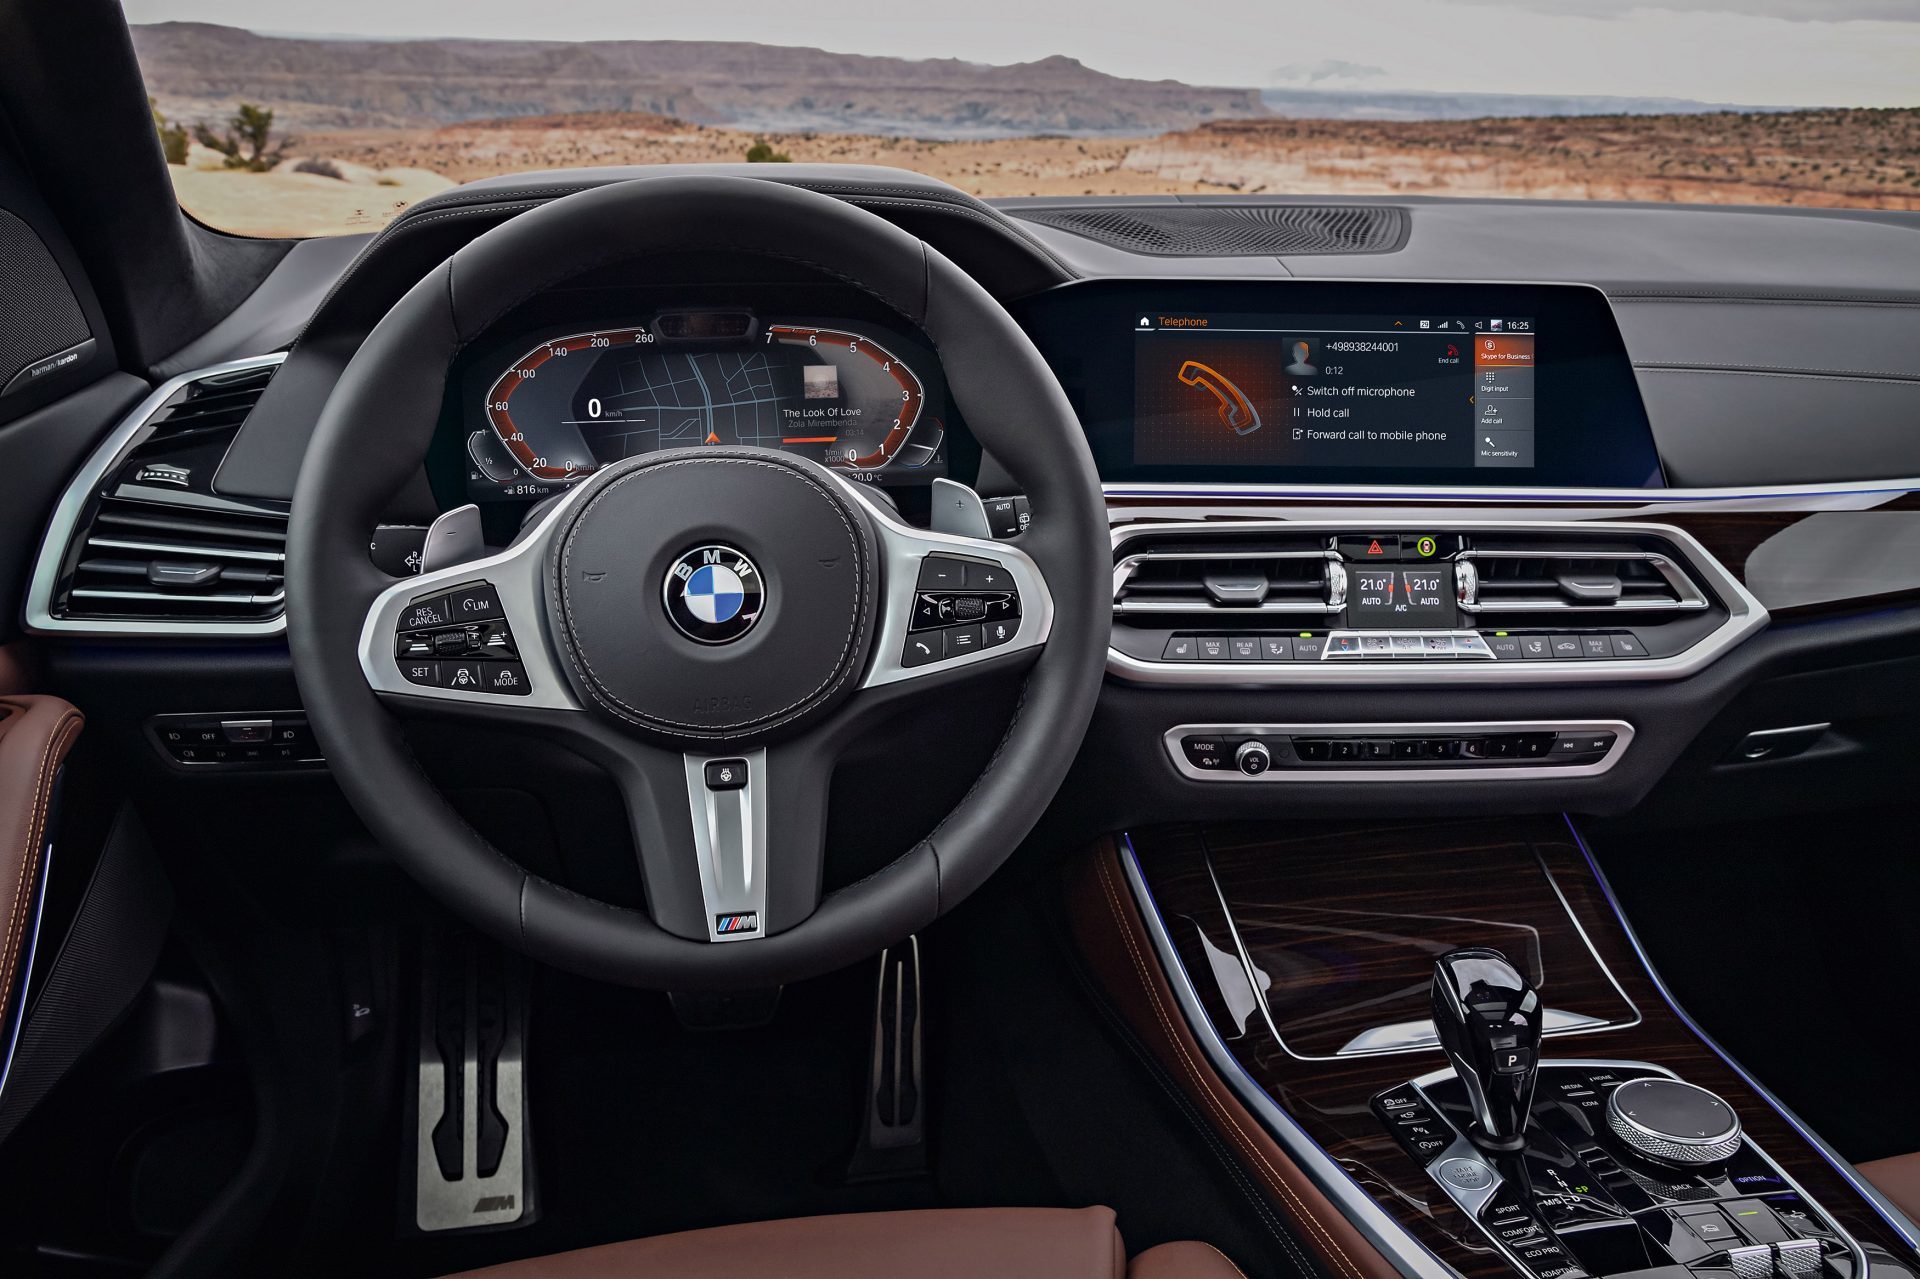 BMW iDrive with BMW Operating System 7.0 